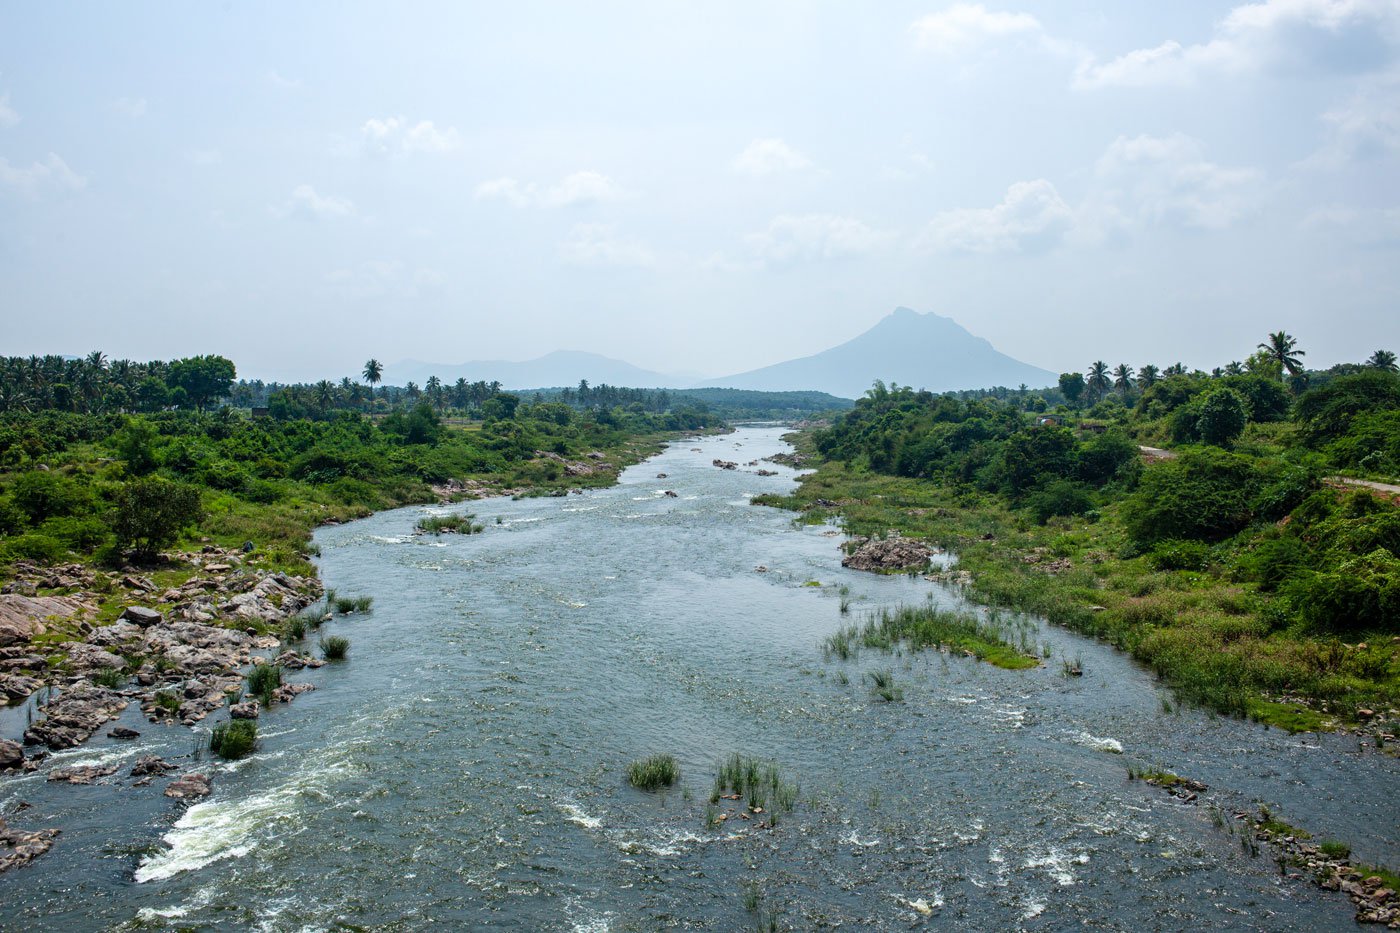 The Thenpannai river that flows between Dharmapuri and Thiruvannamalai districts of Tamil Nadu